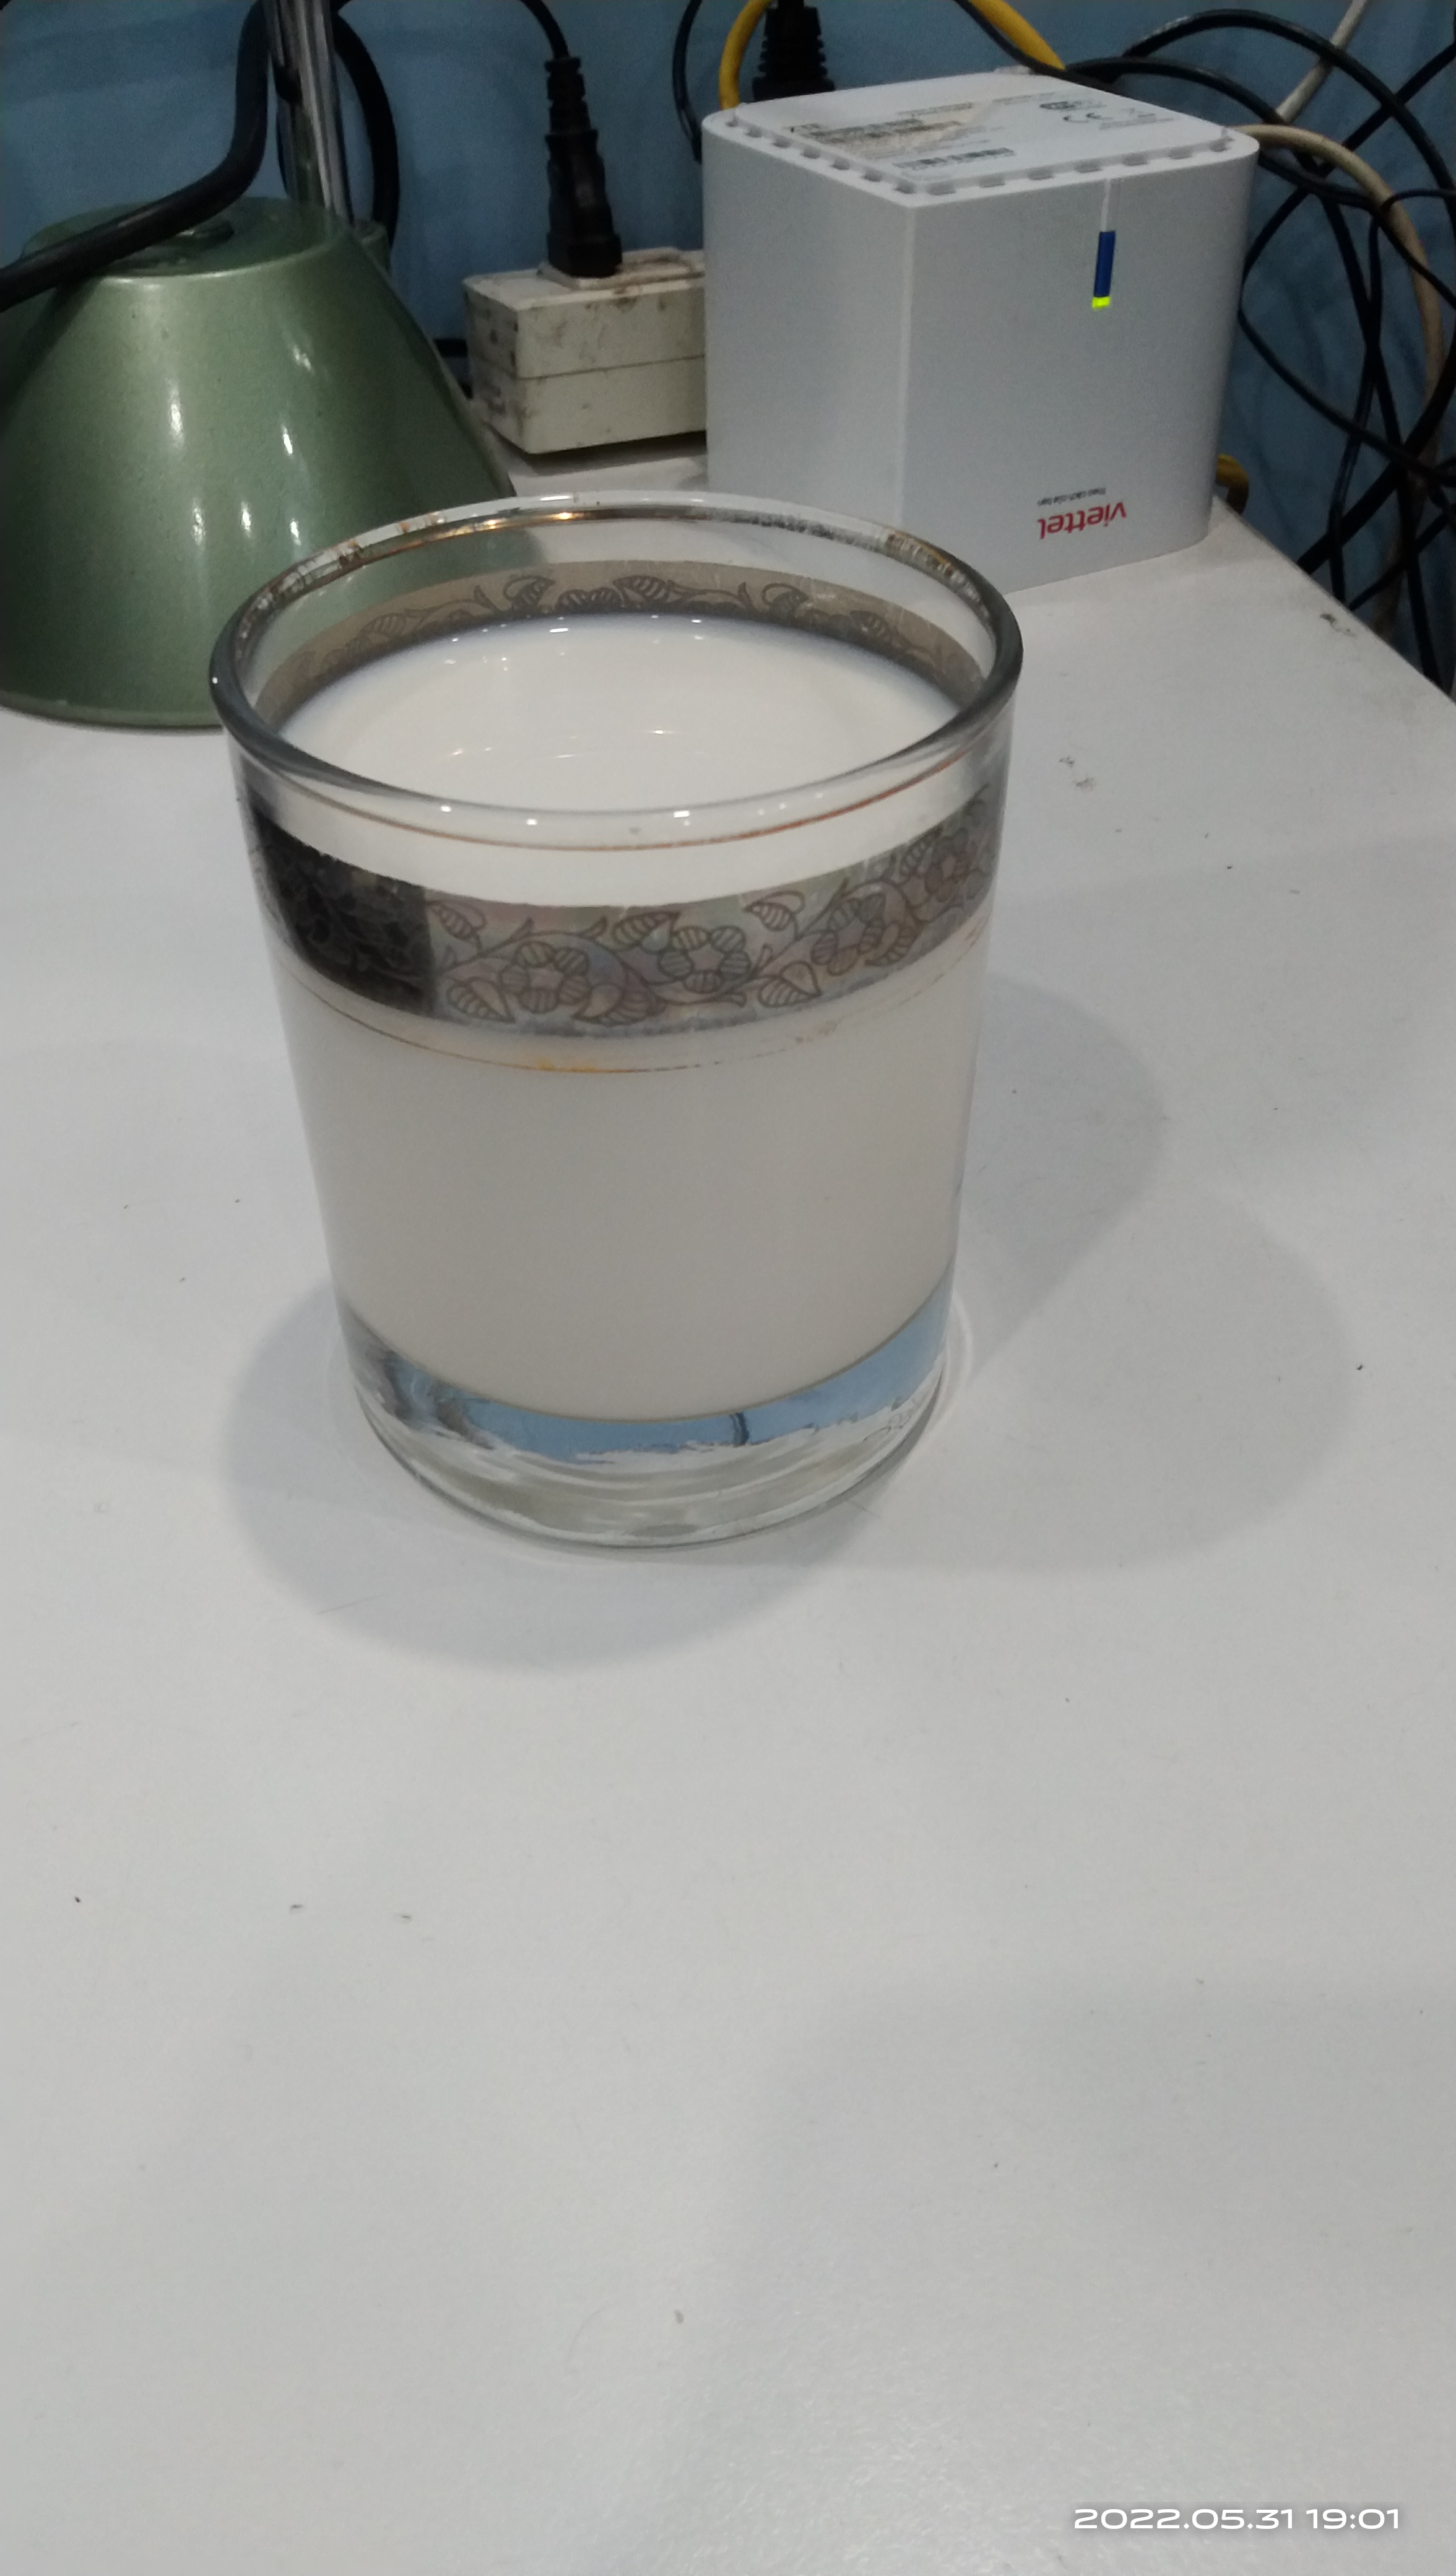 File:Glass of milk.jpg - Wikimedia Commons